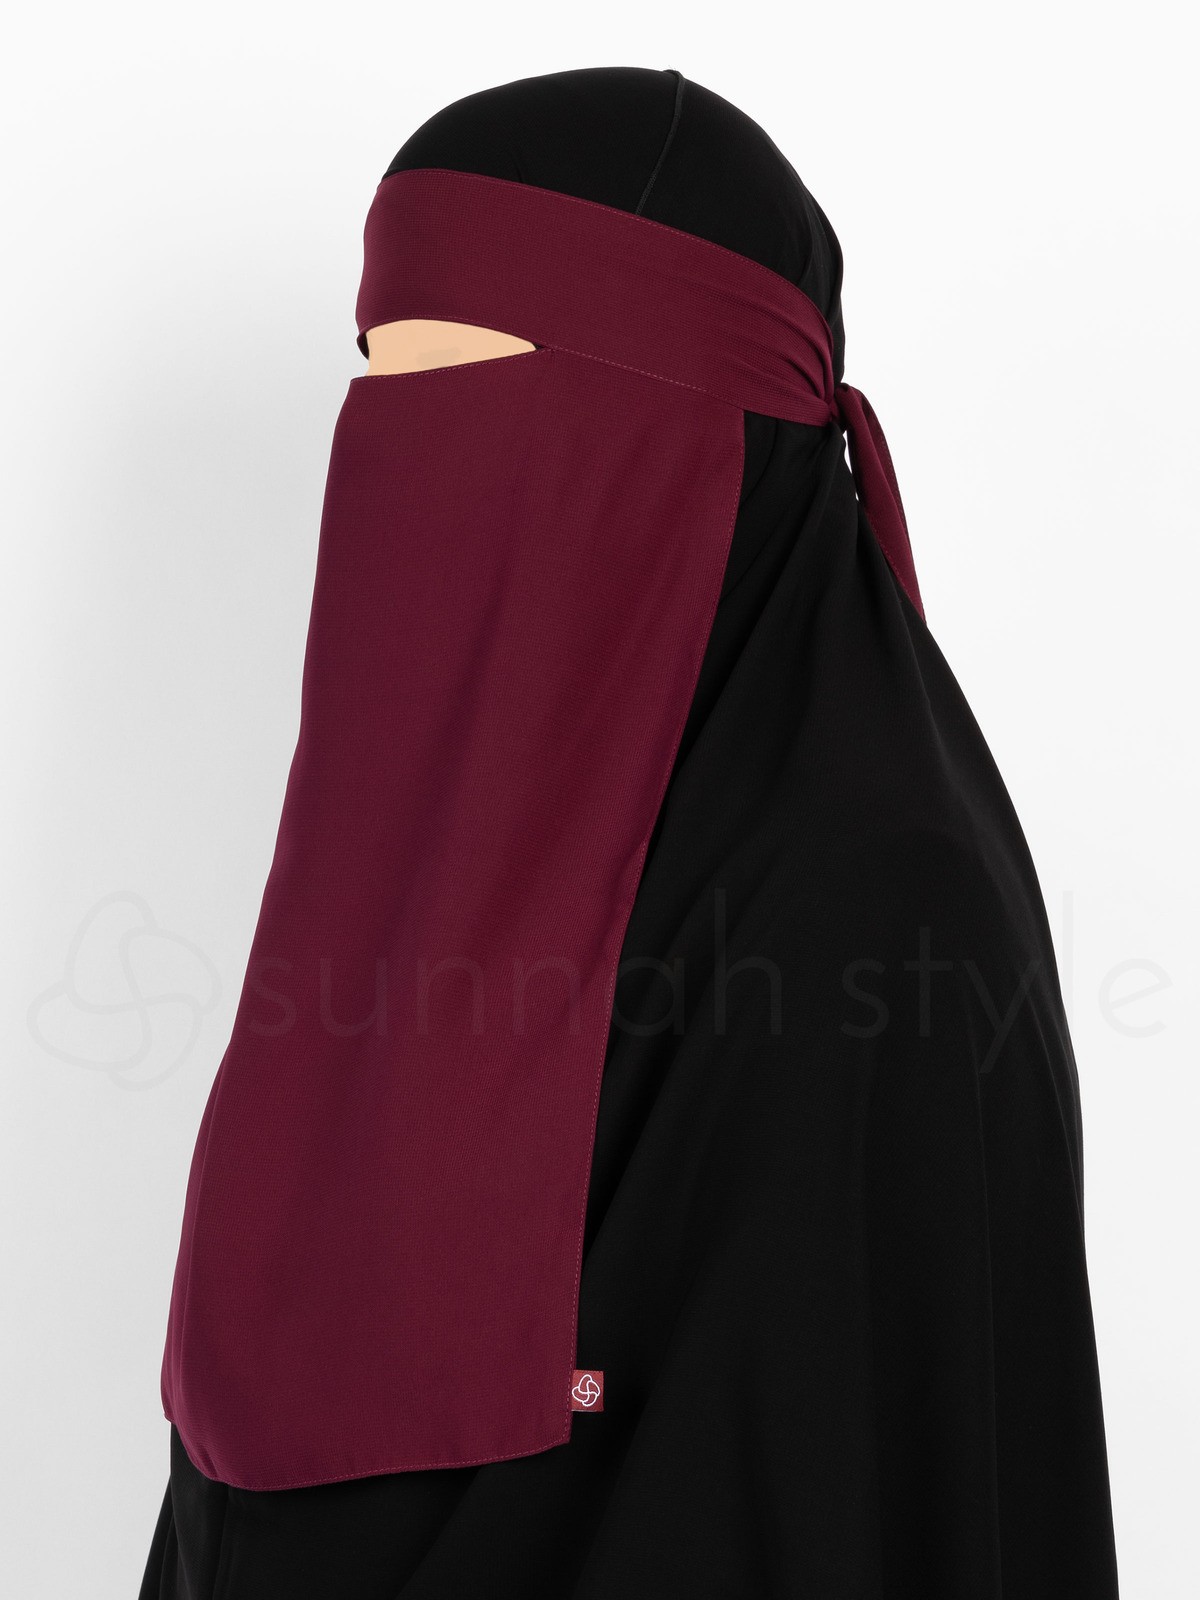 Sunnah Style - One Layer Niqab (Burgundy)